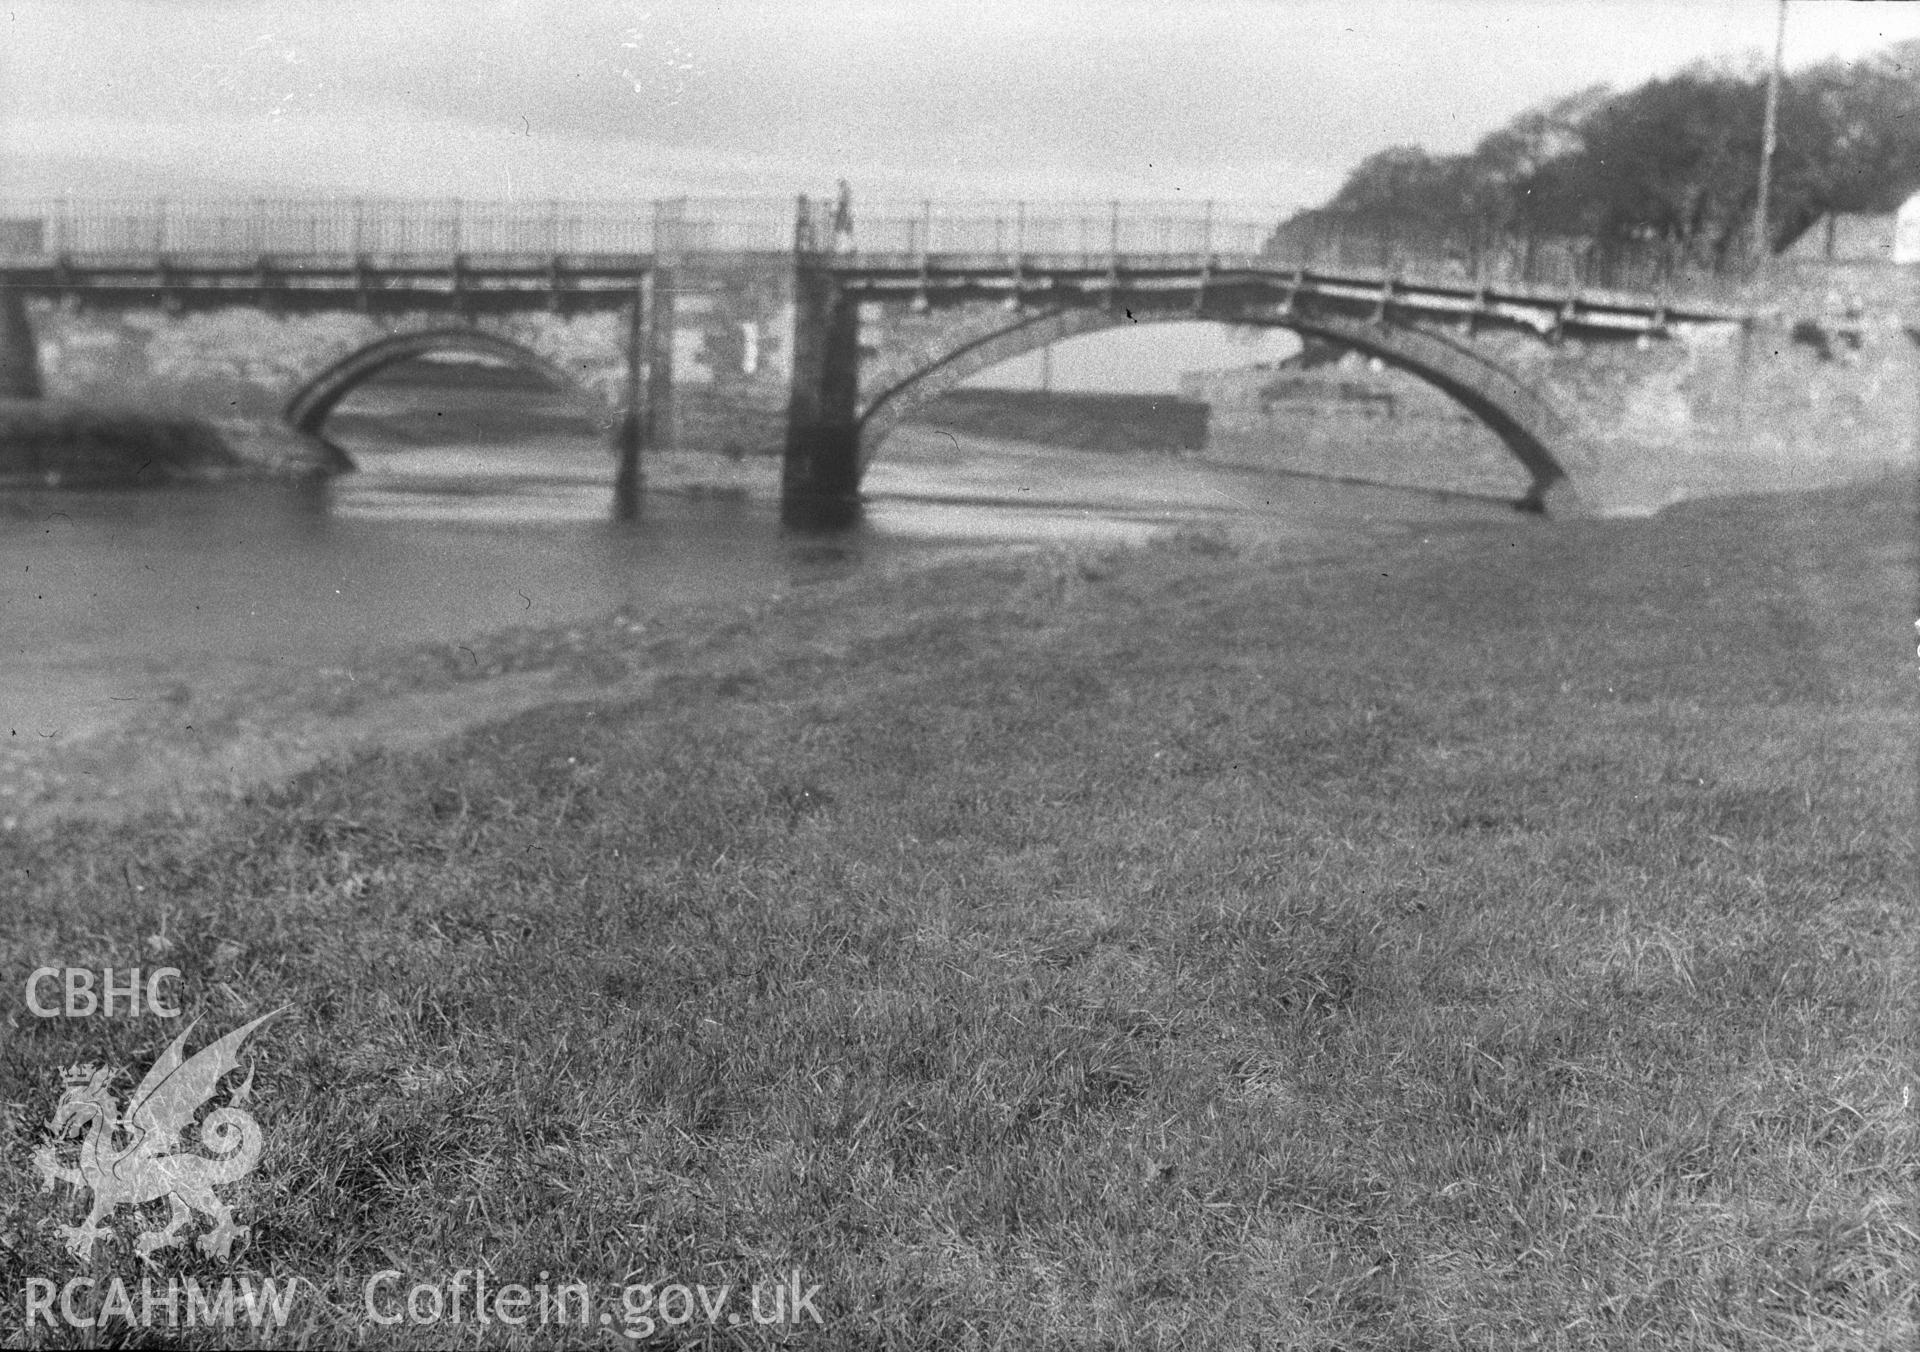 Digital copy of a nitrate negative showing the bridge at Rhuddlan, taken by Leonard Monroe, 1940's.